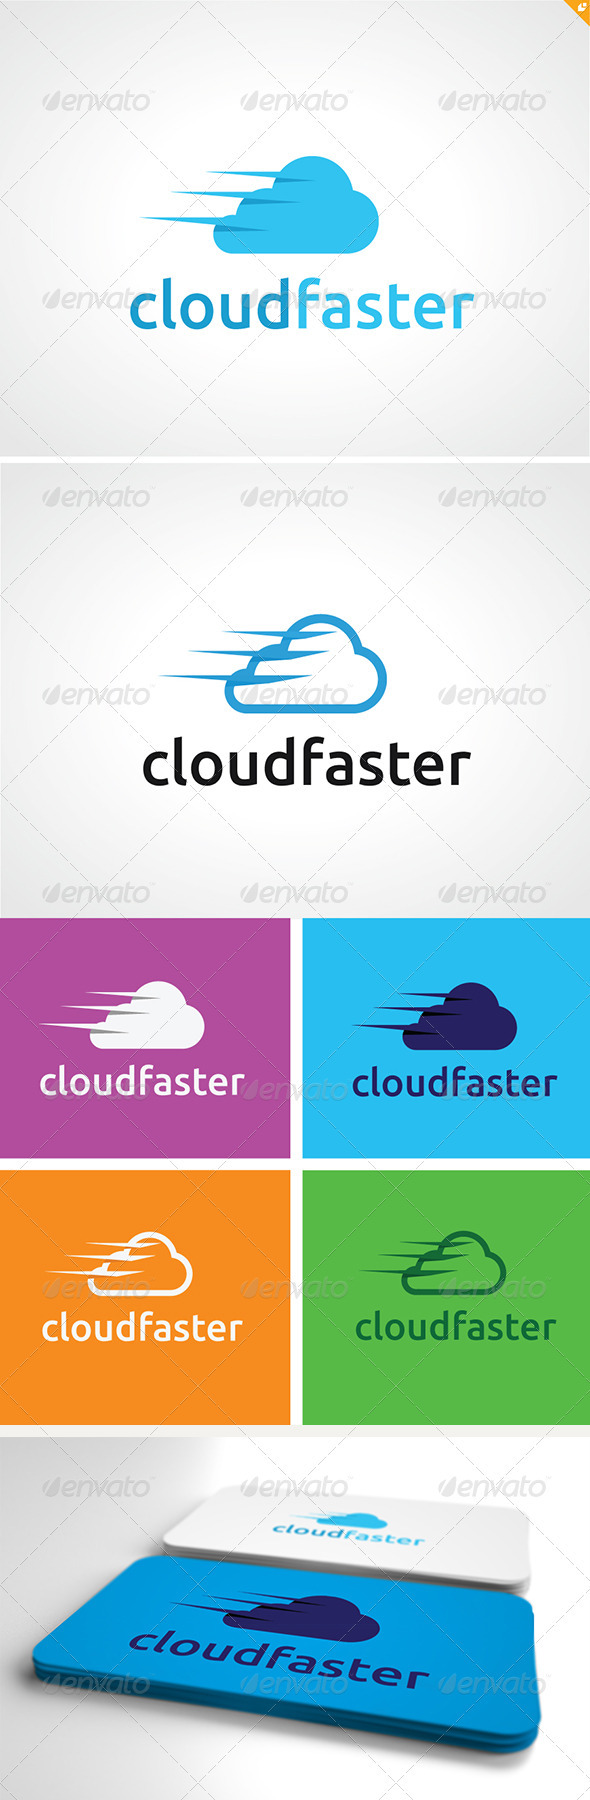 Cloud Faster Logo